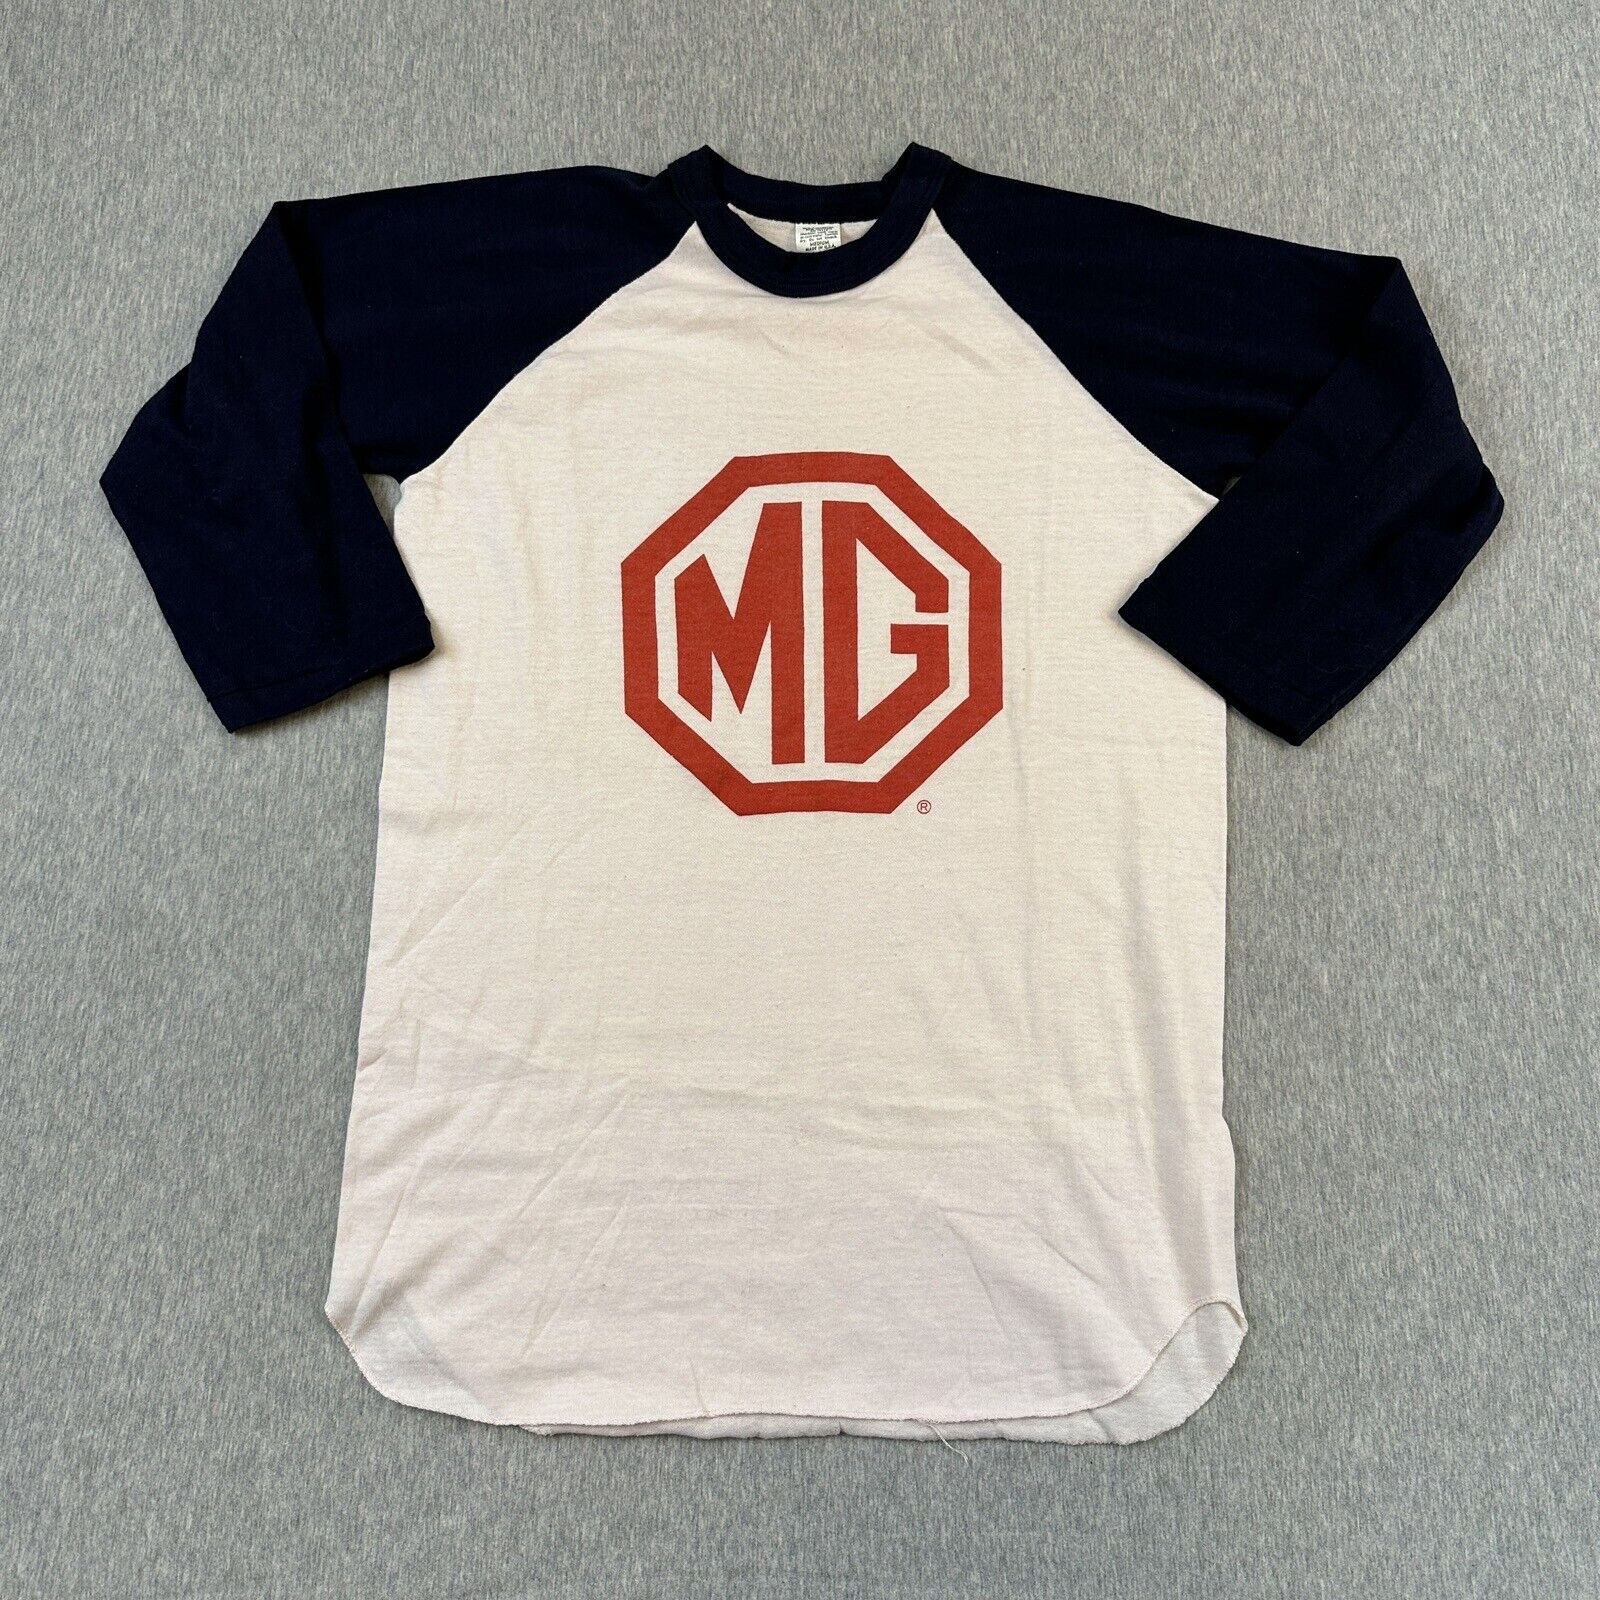 Vintage 1970\'s MG Motor Cars Long Sleeve Raglan Shirt - Sz Medium - Rare Look